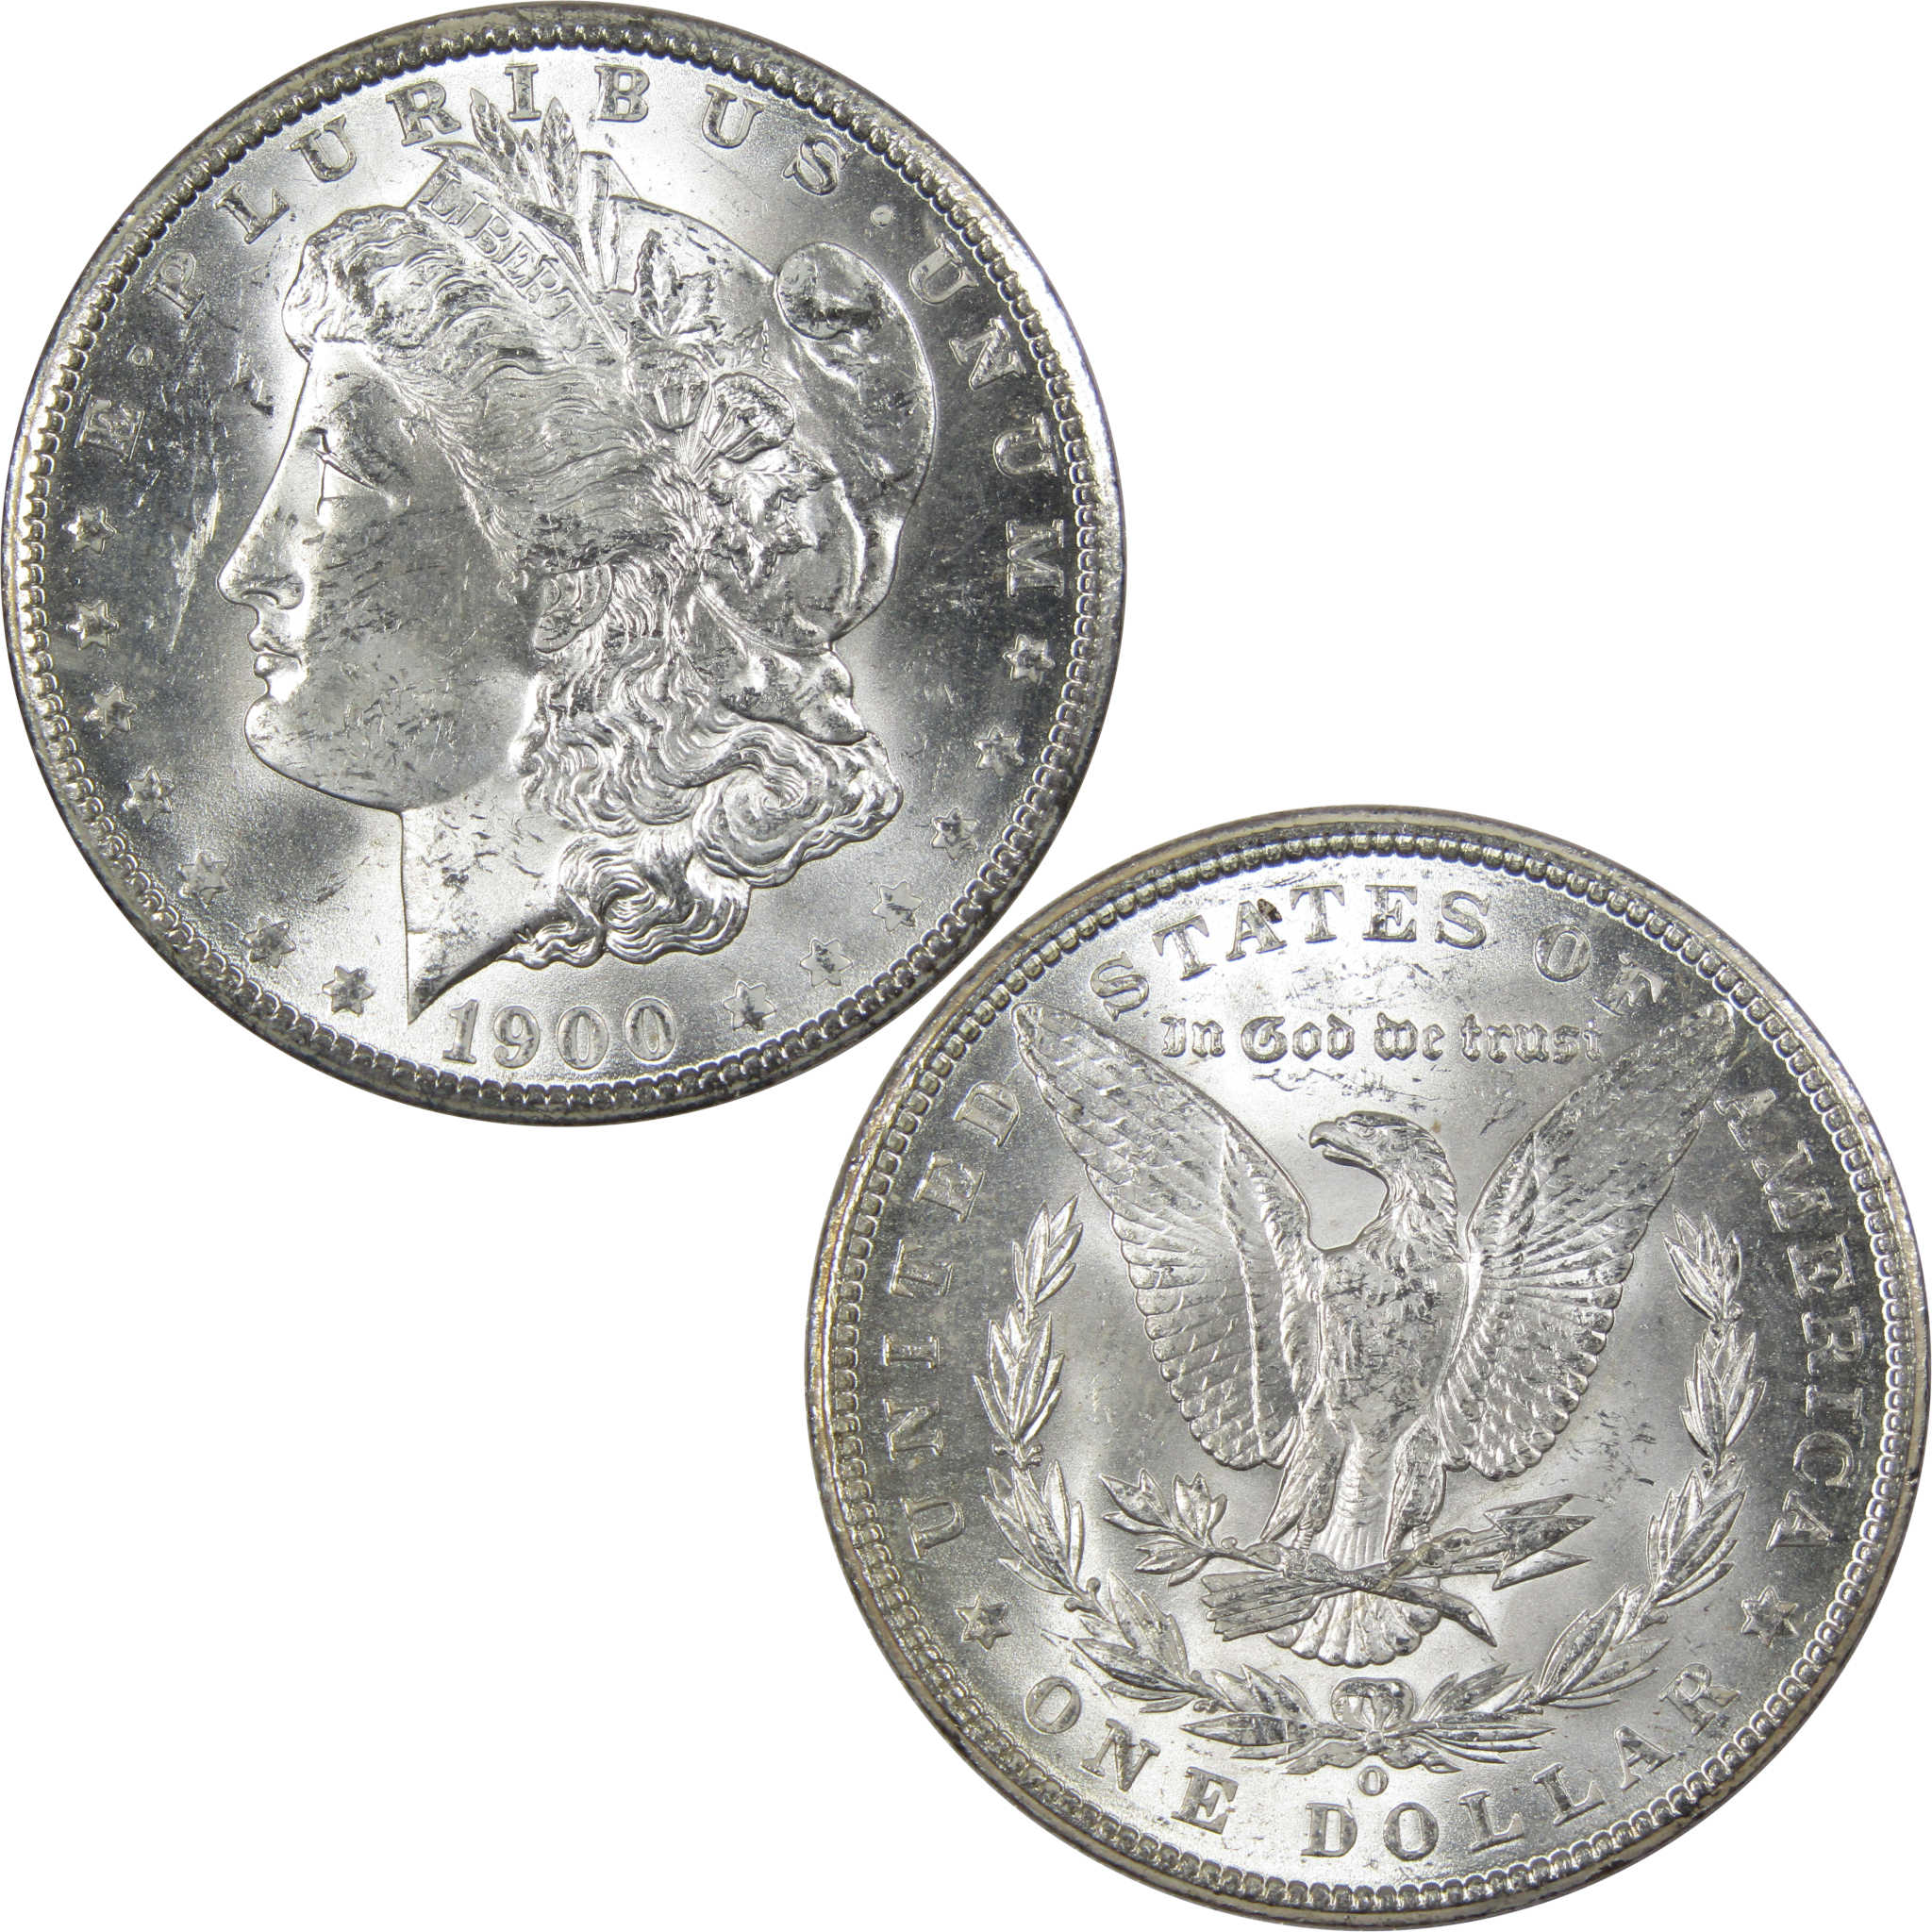 1900 O Morgan Dollar BU Uncirculated Mint State 90% Silver SKU:IPC9748 - Morgan coin - Morgan silver dollar - Morgan silver dollar for sale - Profile Coins &amp; Collectibles